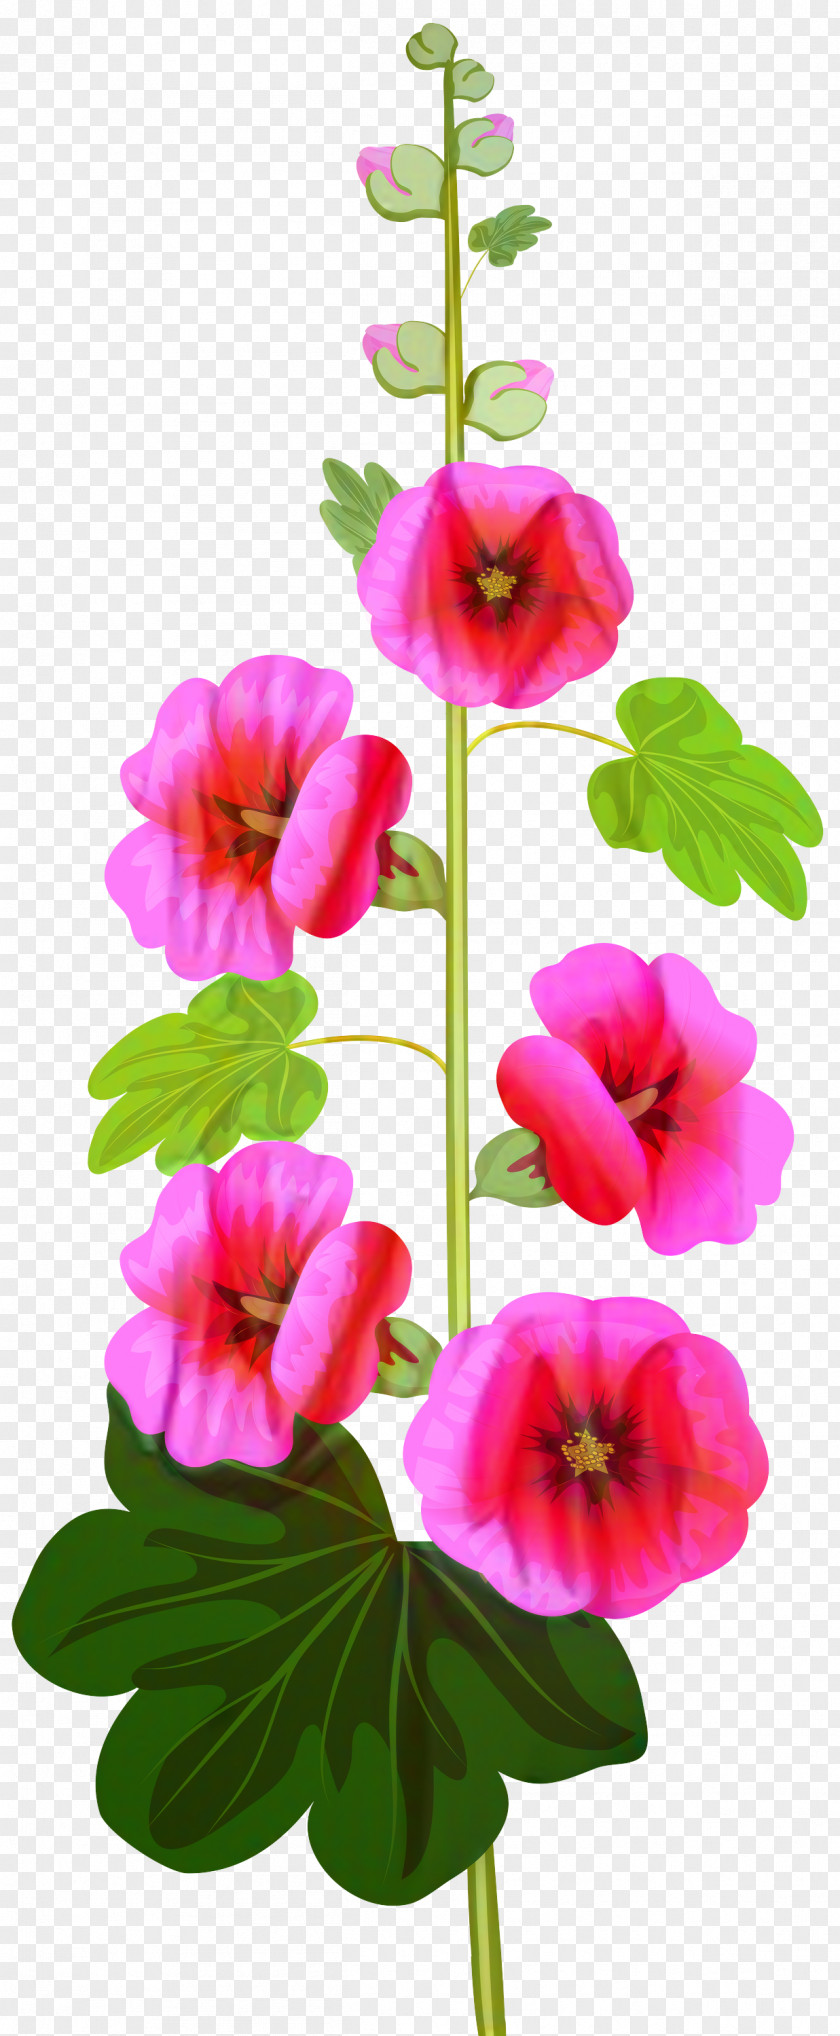 Geranium Annual Plant Watercolor Floral Background PNG